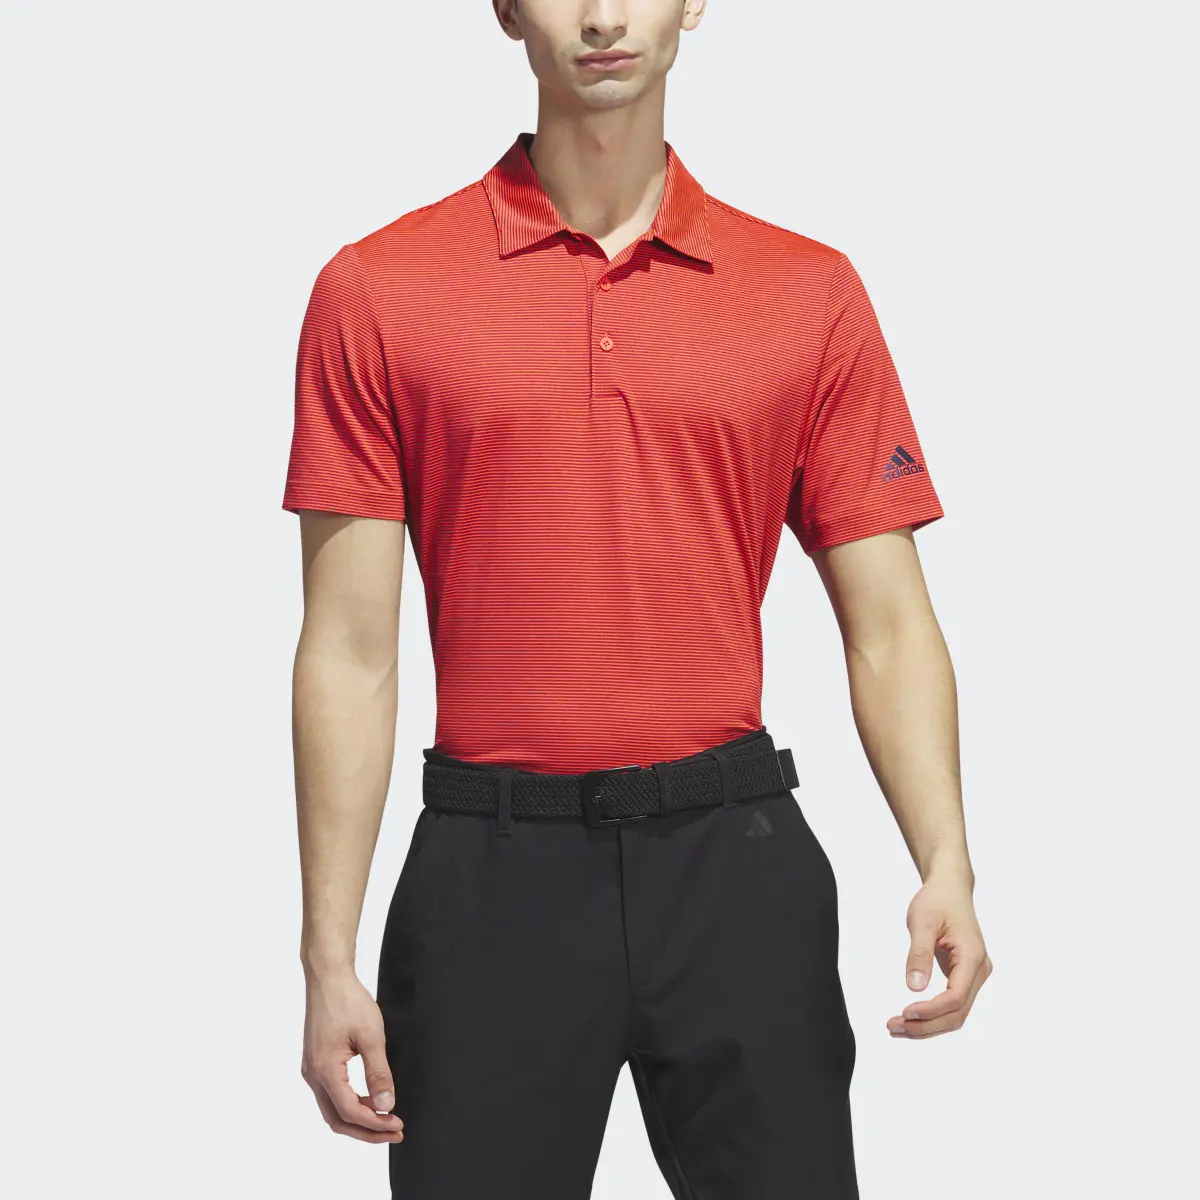 Adidas Ottoman Stripe Golf Polo Shirt. 1